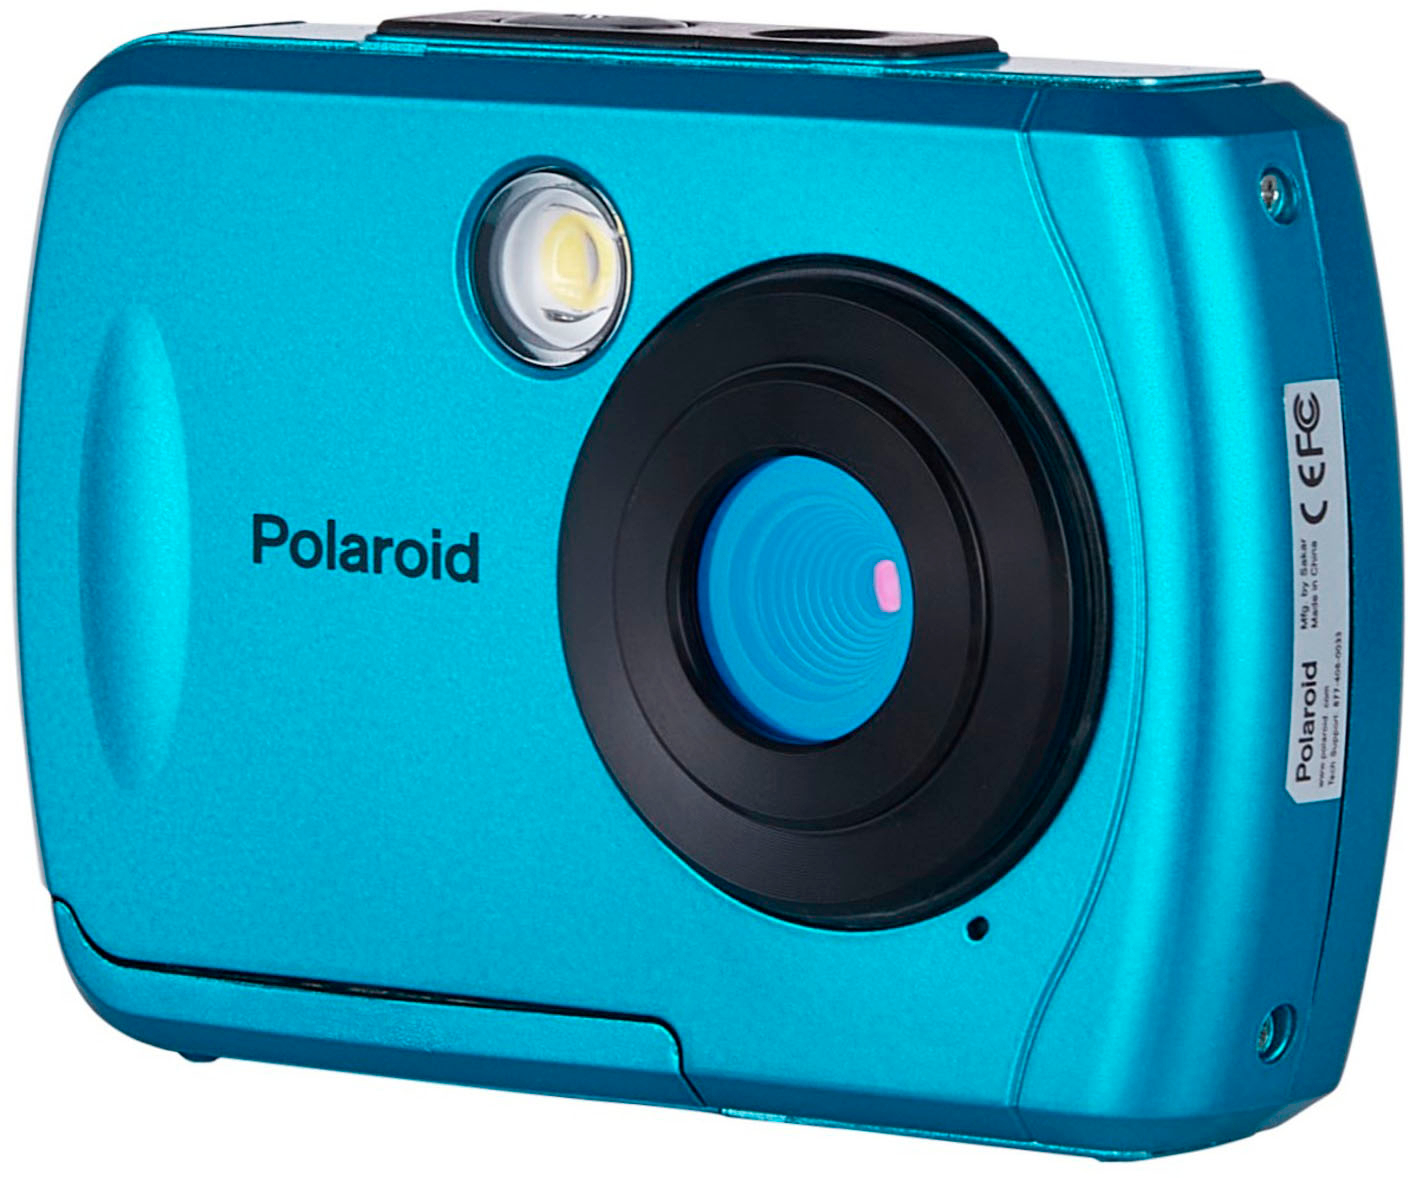 polaroid camera teal